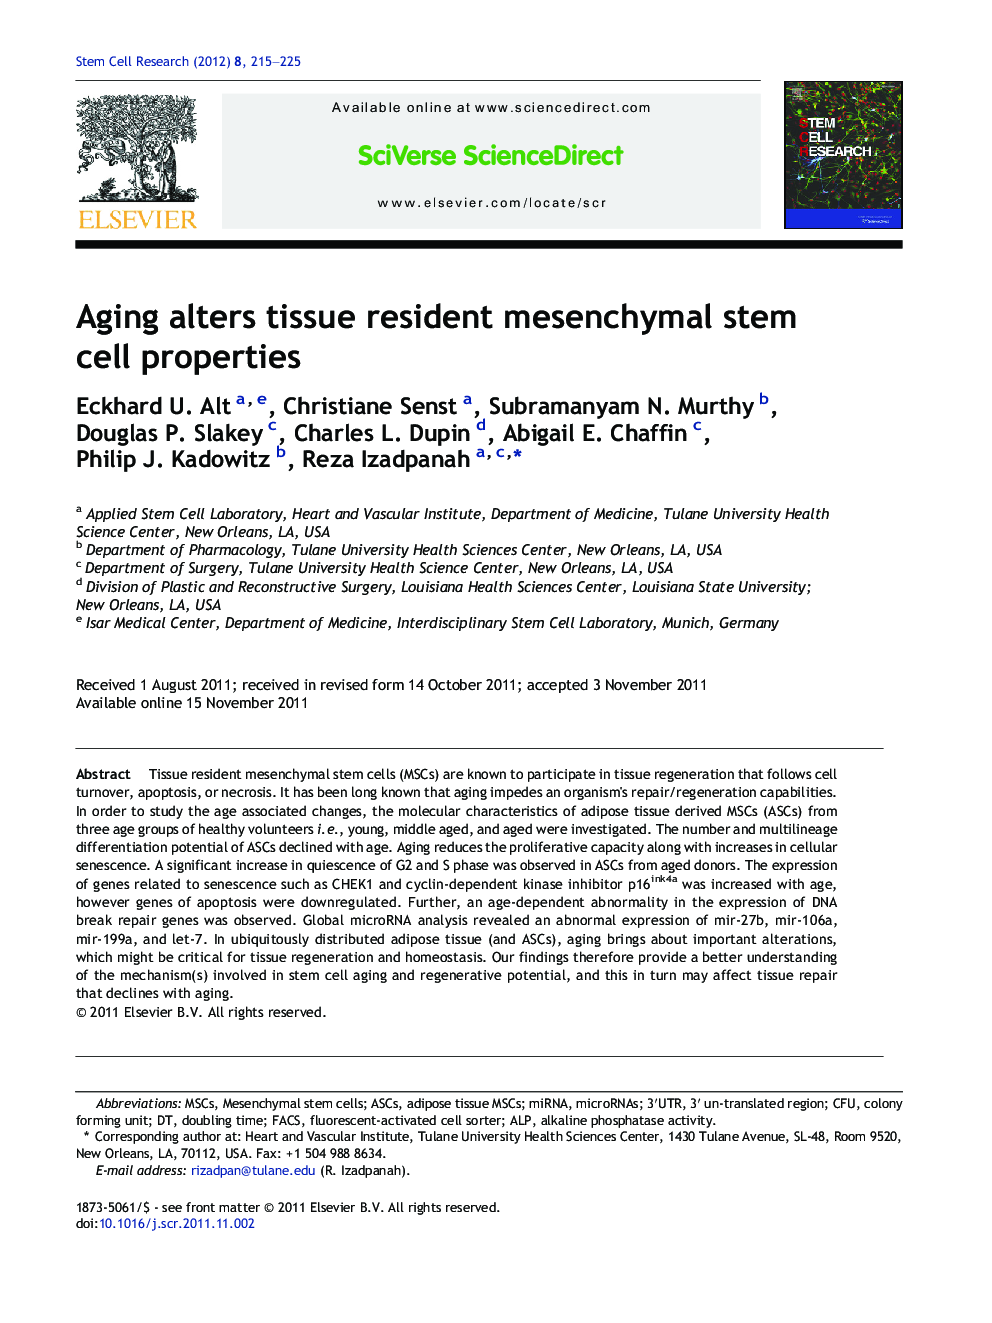 Aging alters tissue resident mesenchymal stem cell properties